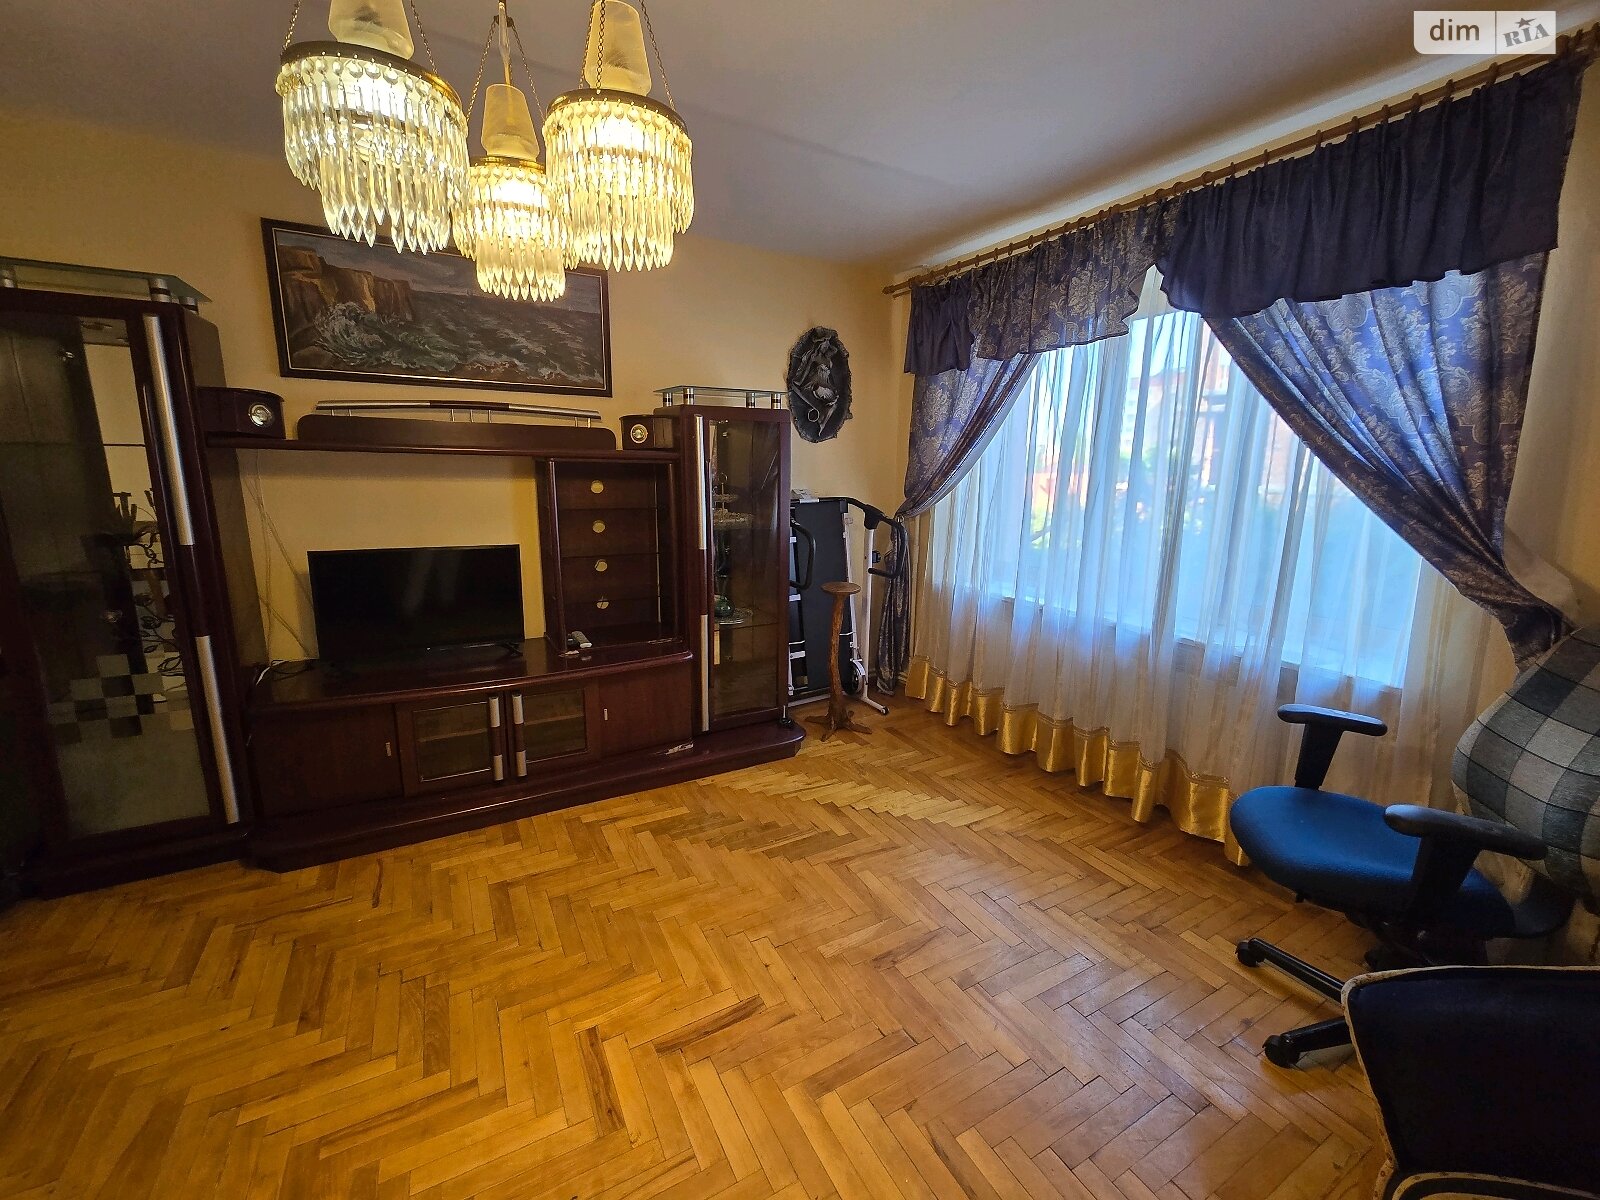 Продаж чотирикімнатної квартири в Ужгороді, на вул. Капушанська 132, фото 1